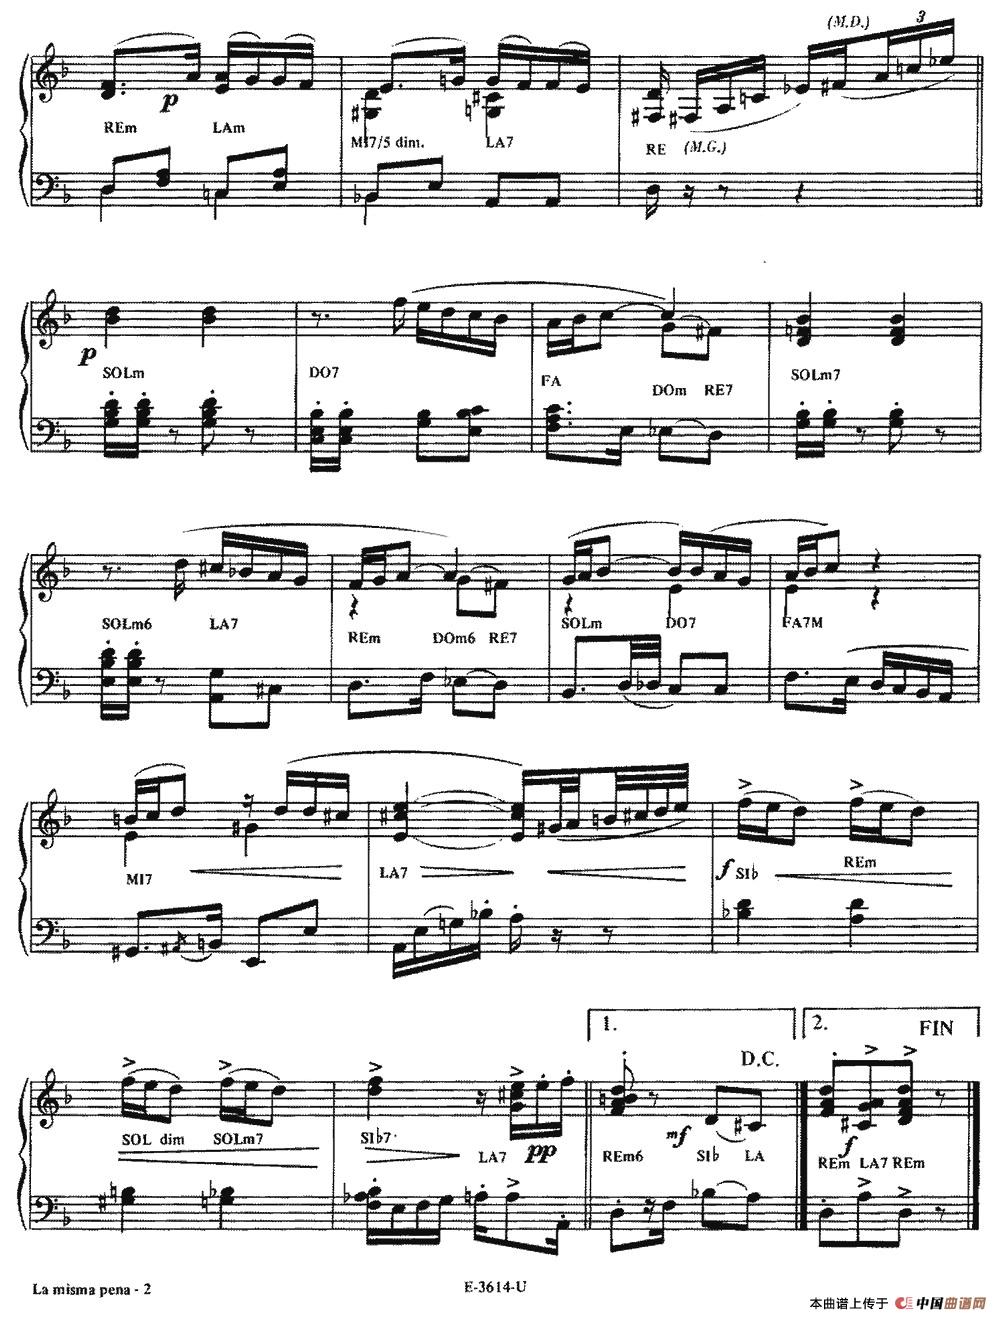 Piazzolla合集：16、La Misma Pena手风琴谱/简谱